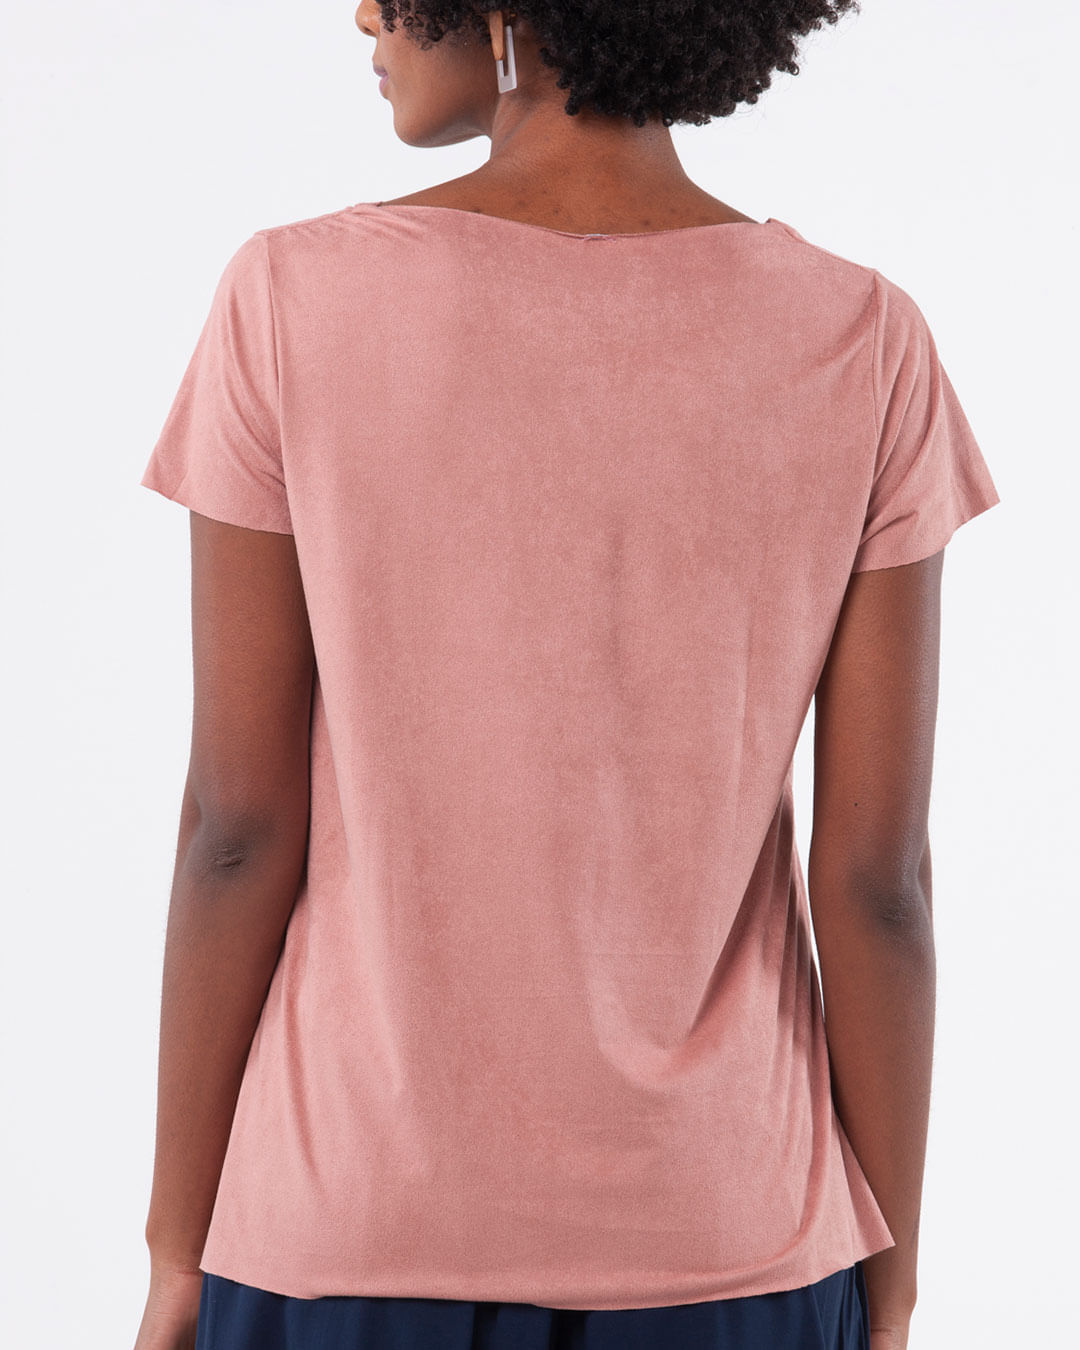 Camiseta-Feminina-Suede-Amarracao-Rosa